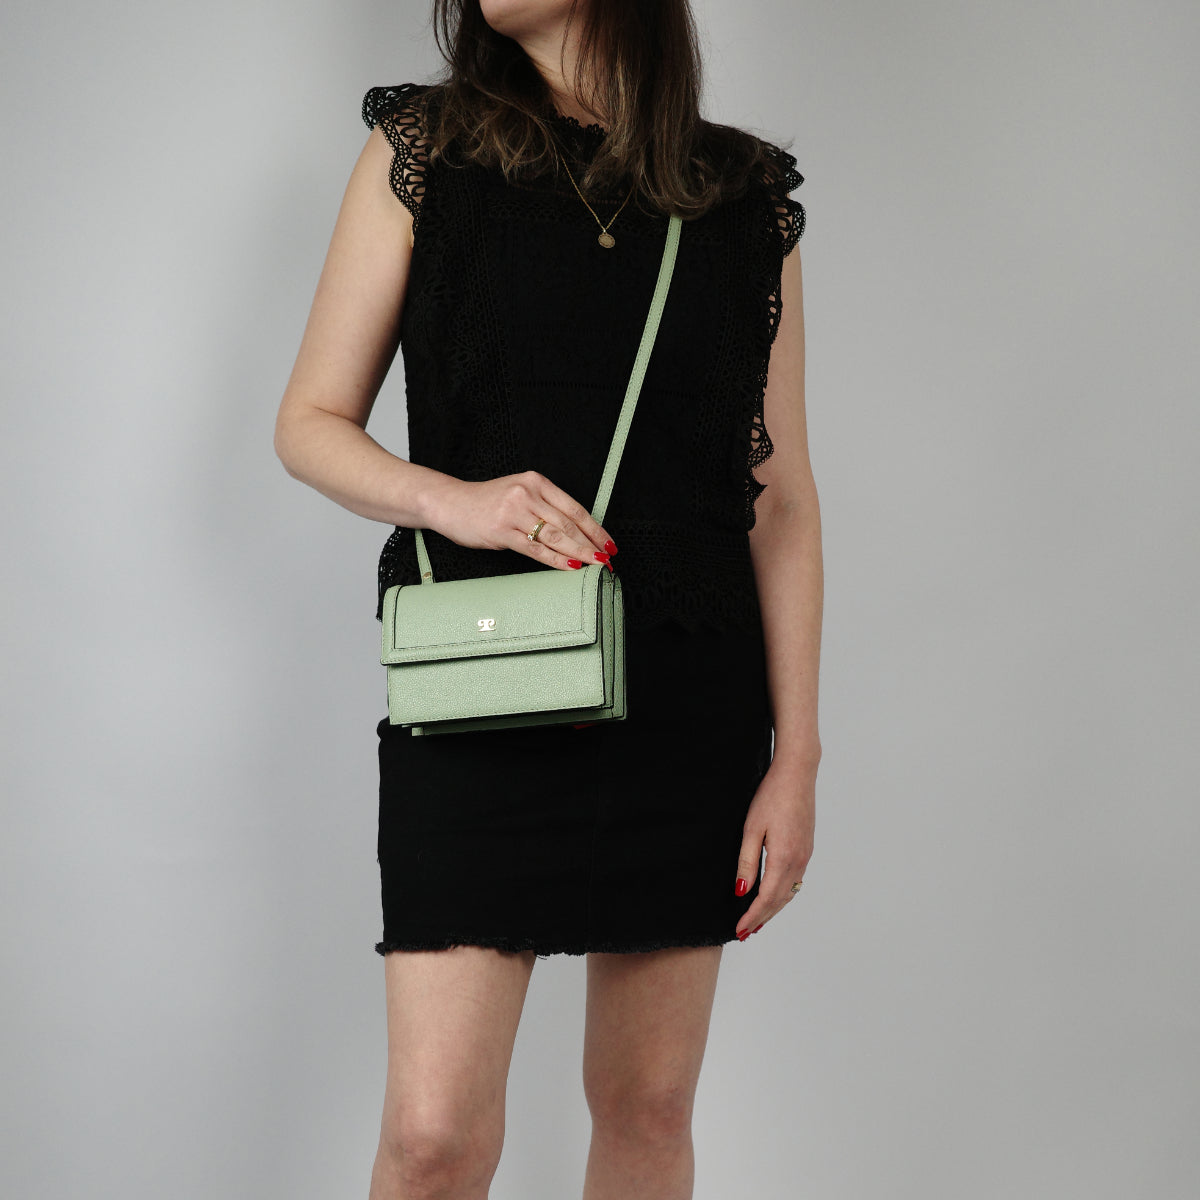 Pierre Cardin Ladies Leather Flap Over Cross-Body Bag in Jade